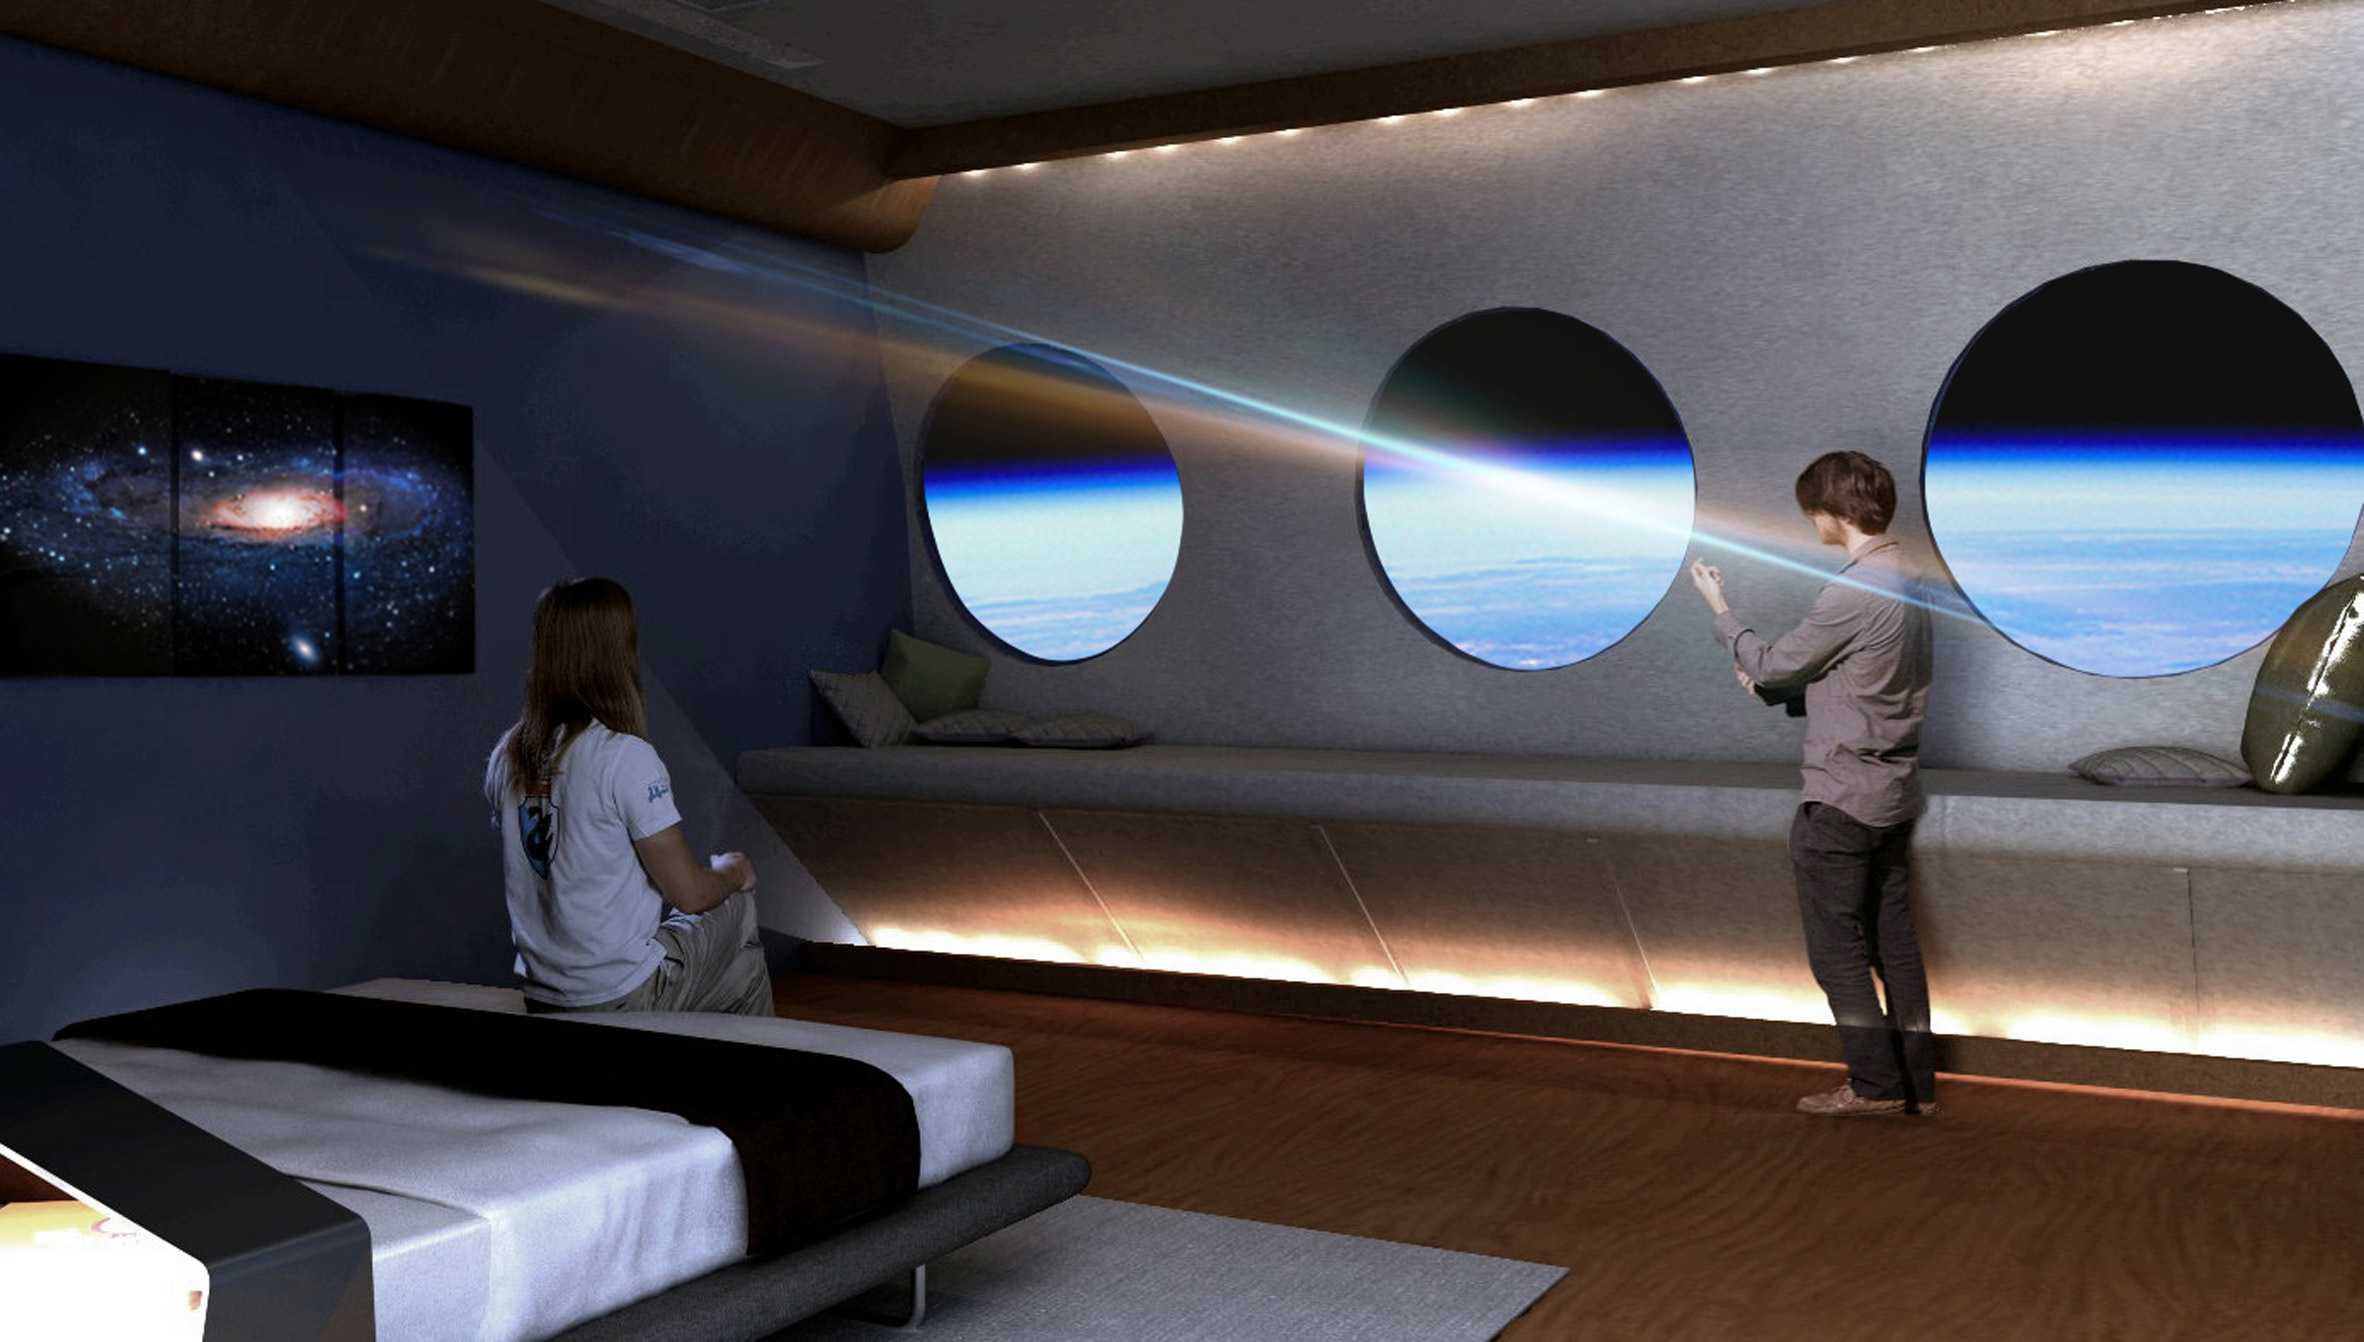 space station interior concept resort